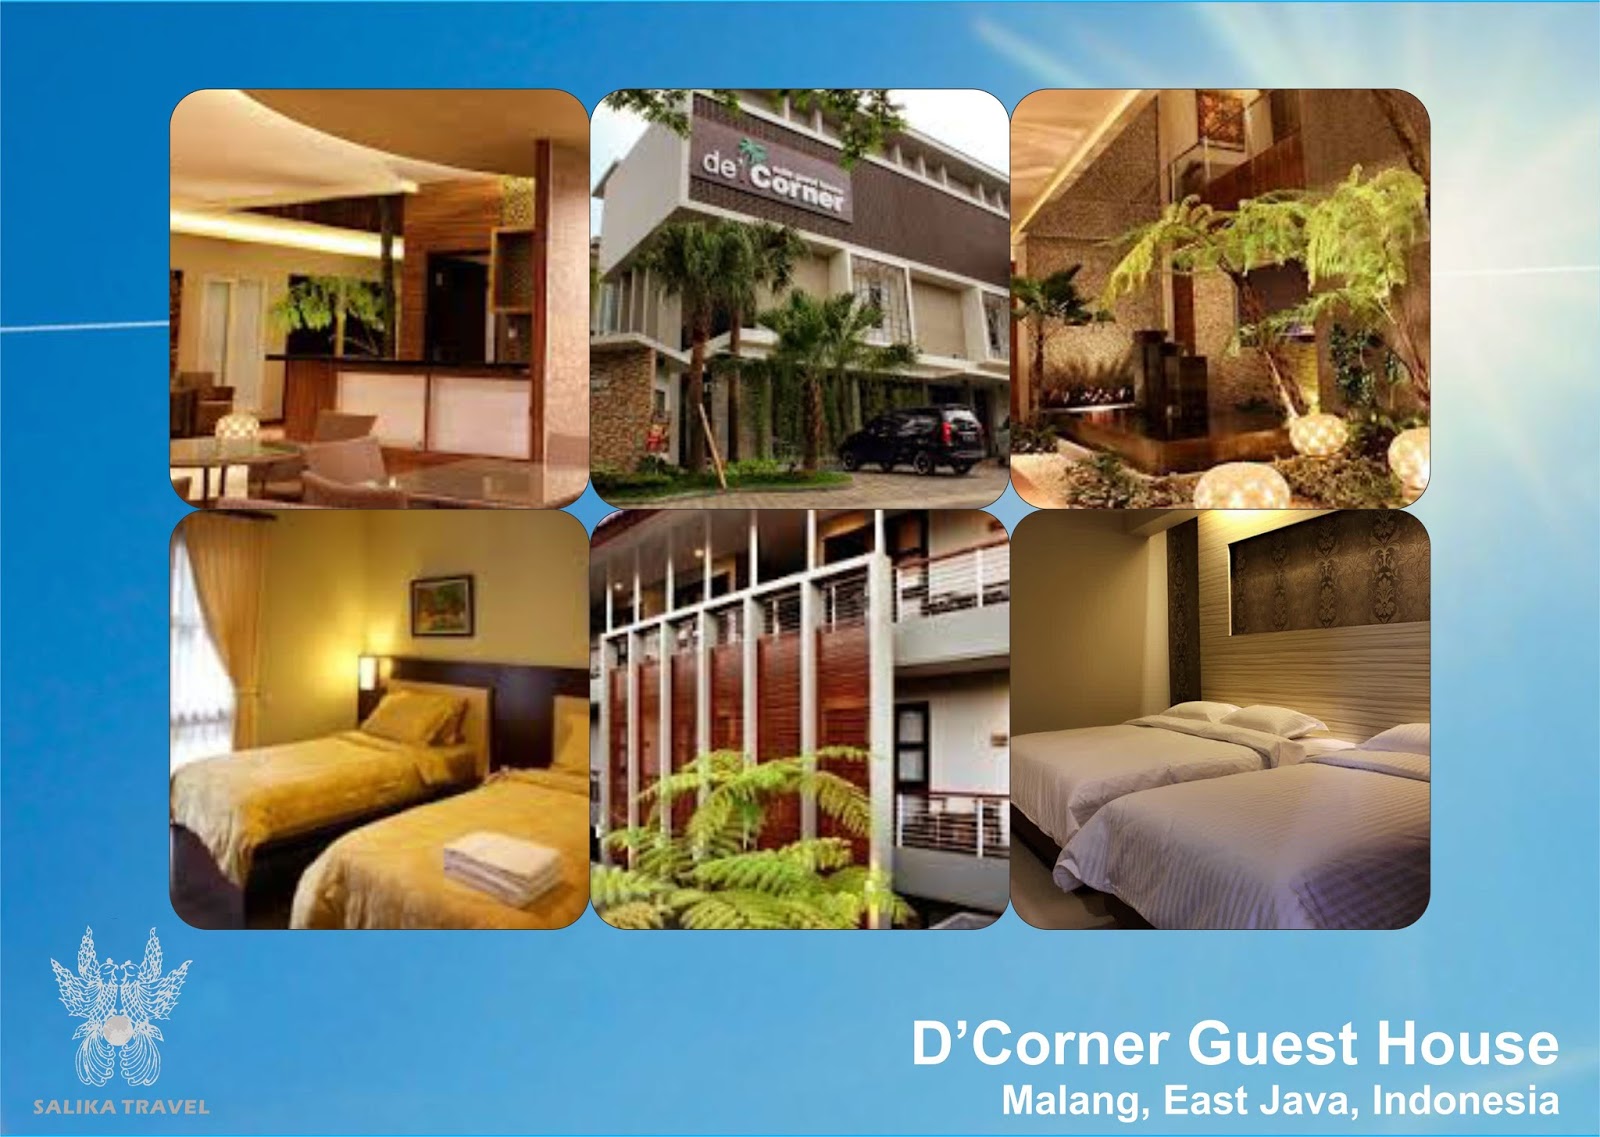 D'Coner Guest House Malang - Salika Travel